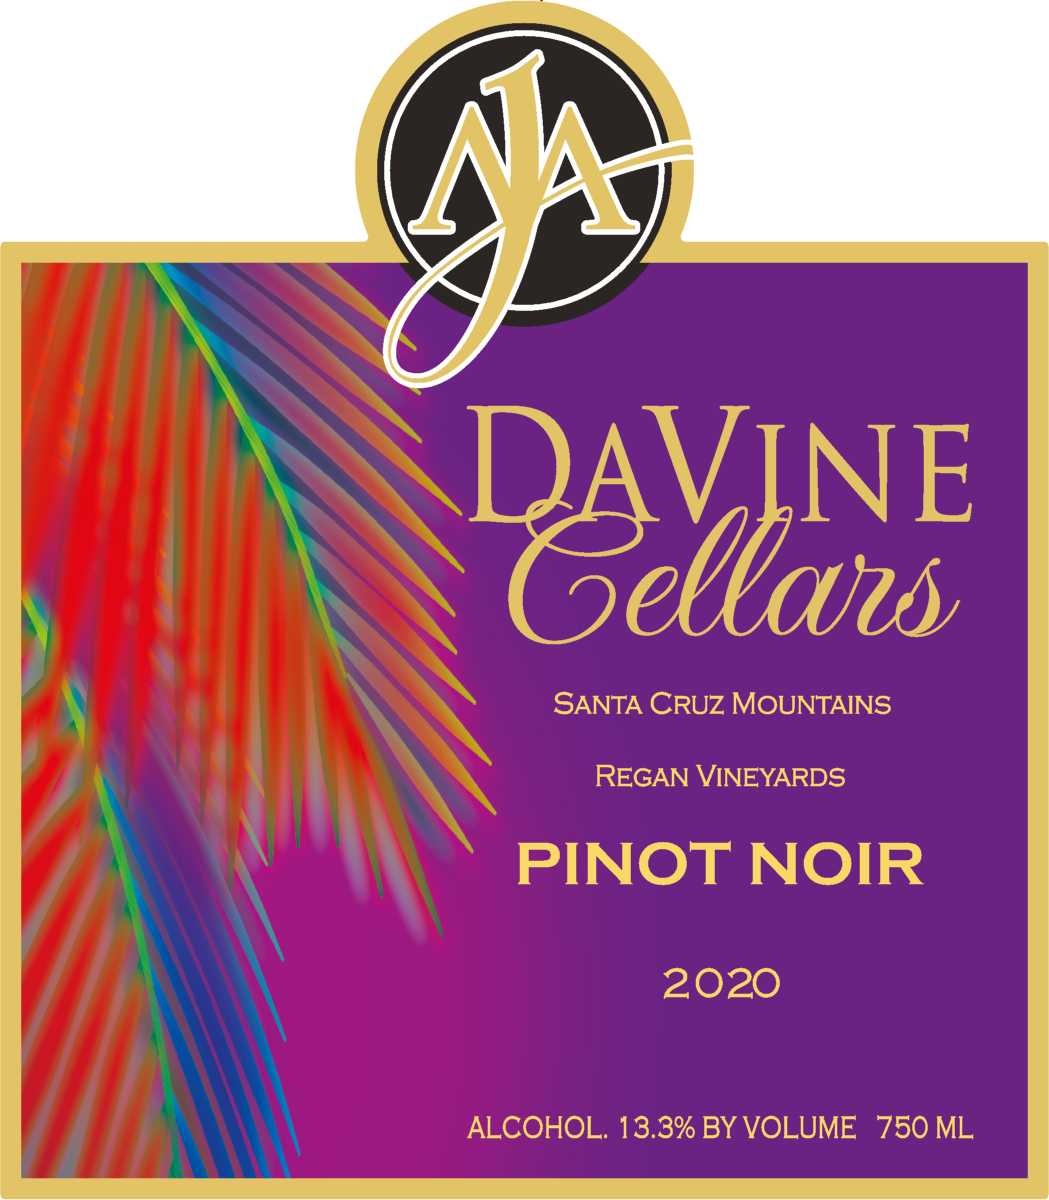 Product Image for 2020 Santa Cruz Mountains, Regan Vineyards Pinot Noir "Wink"